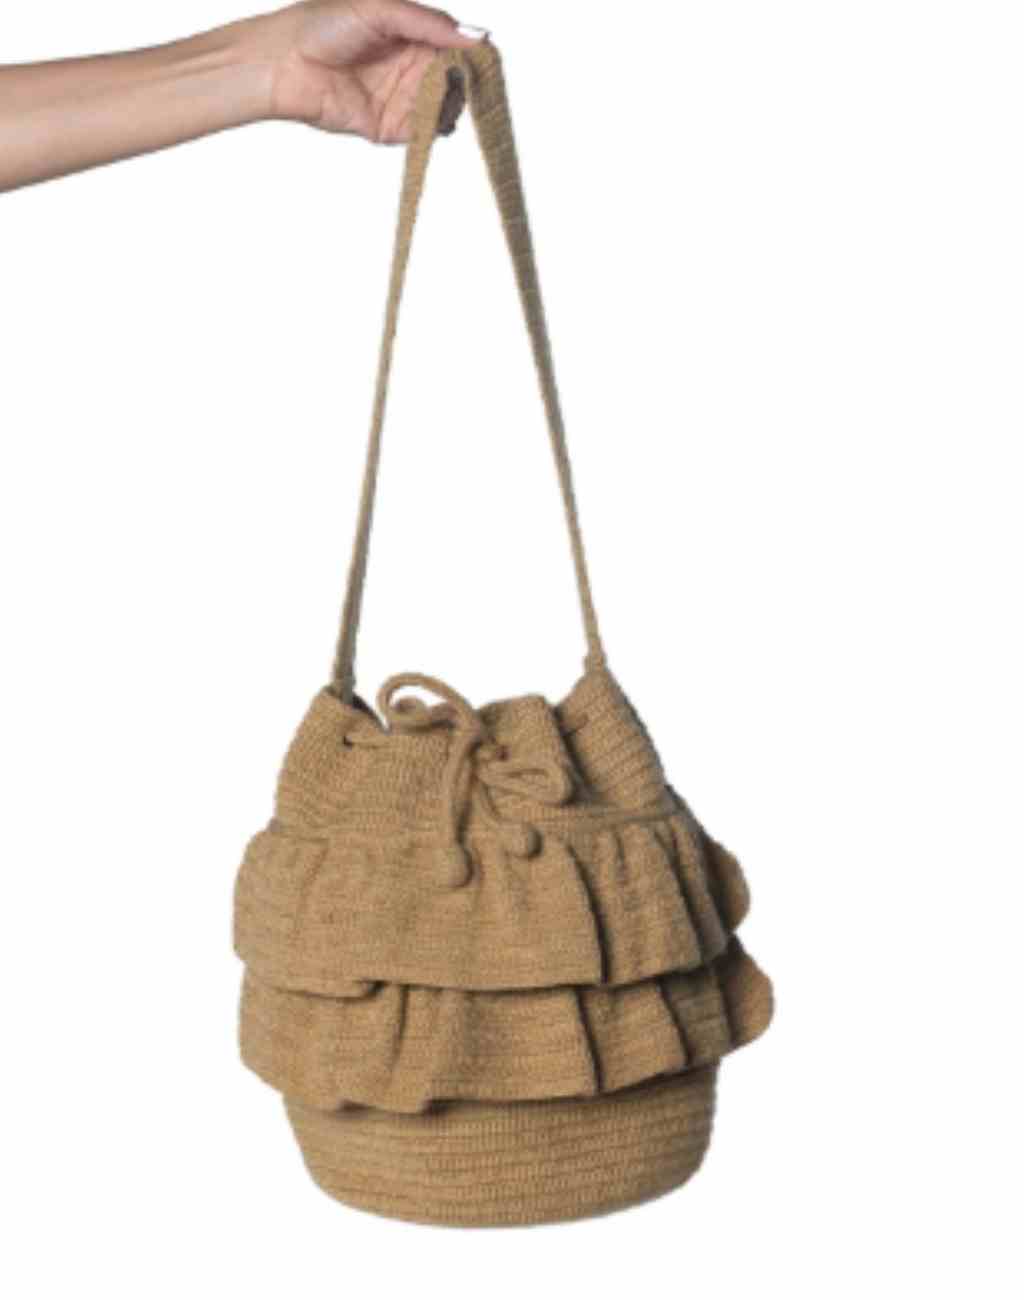 Handmade Crocheted Bucket Bag with Ruffles